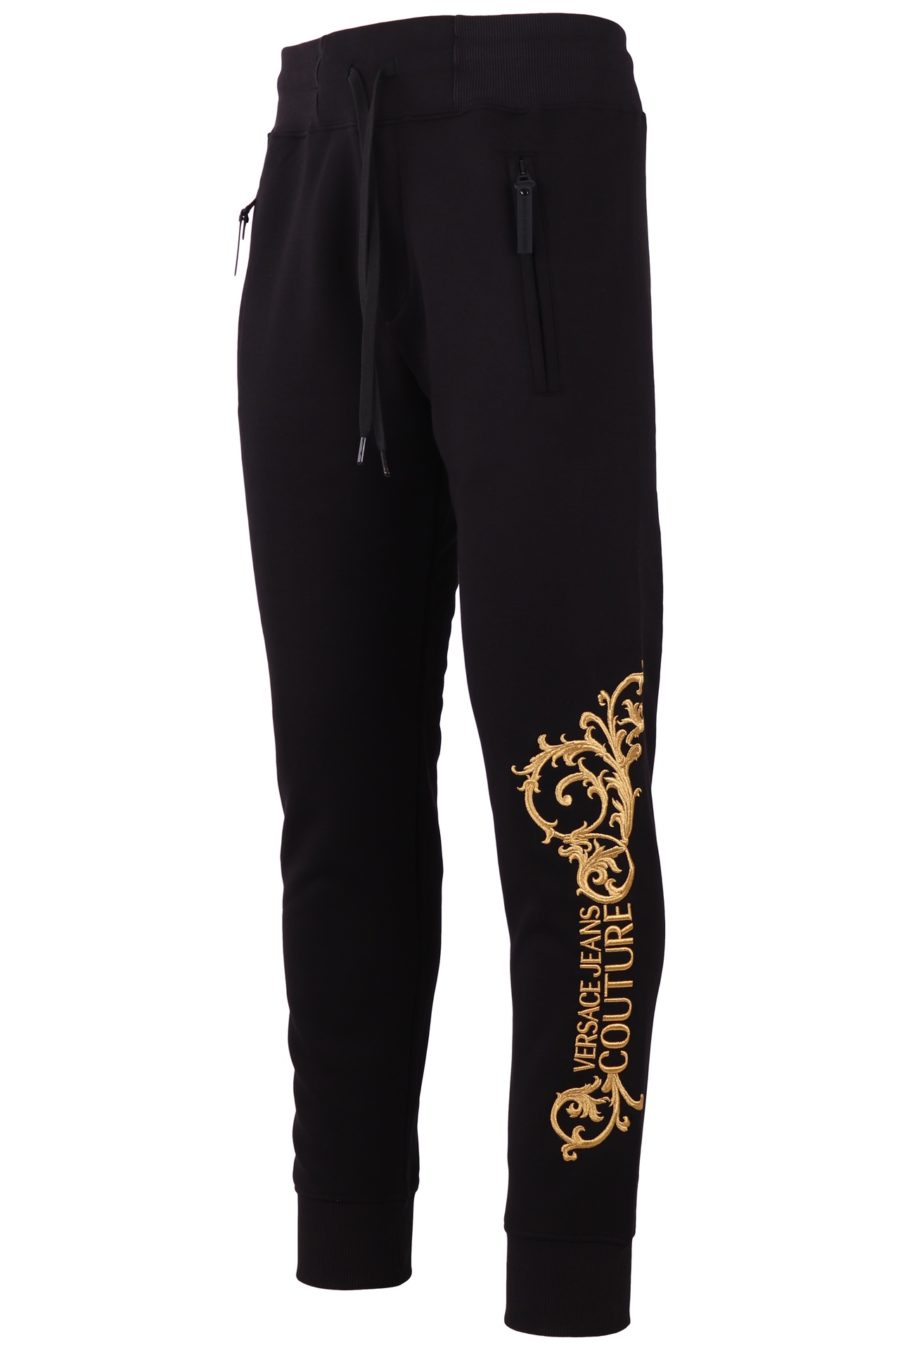 Tracksuit bottoms Versace Jeans Couture black with embroidered logo - fe7a5f5e0da208370e17f3c9ec5cebc2a92d38a5